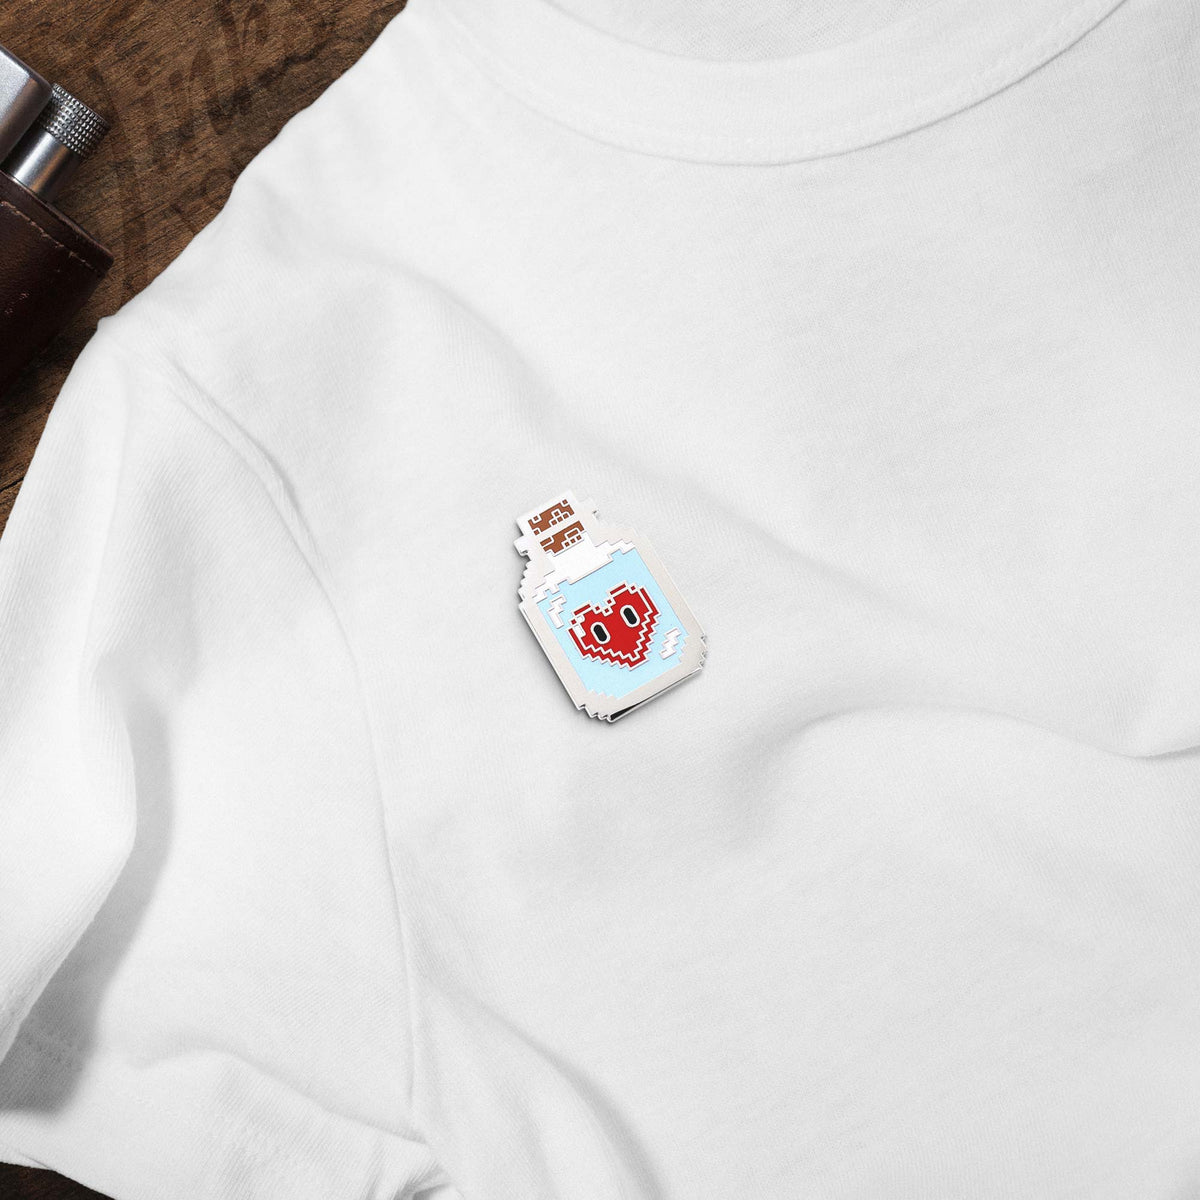 8-Bit Love Potion hard enamel pin on white t-shirt